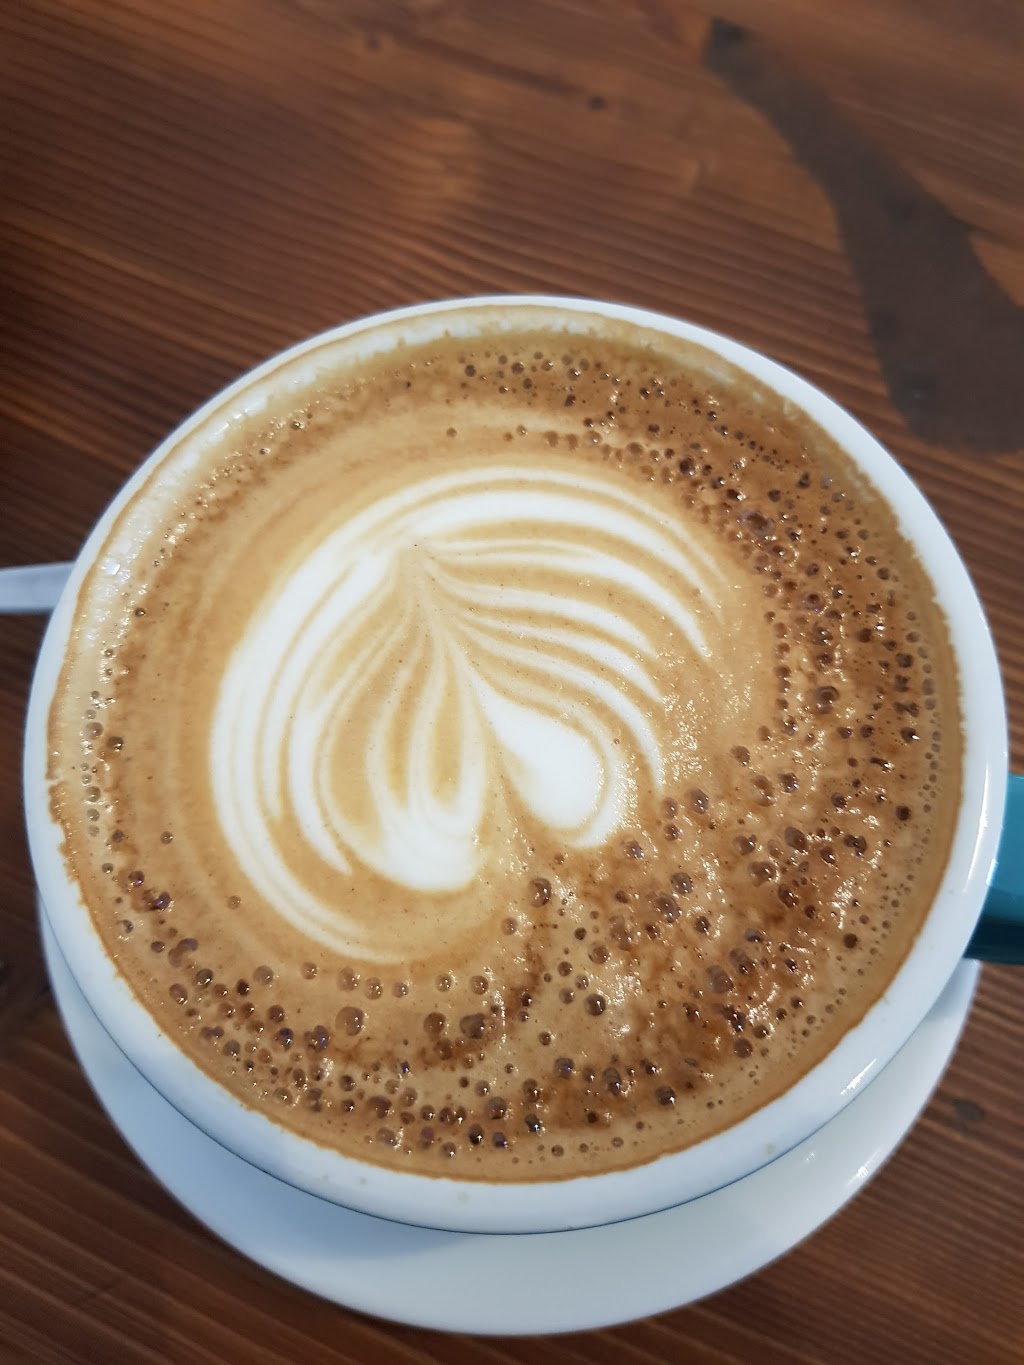 White Picket Coffee House | 10 Stuart Rd, Dulwich SA 5065, Australia | Phone: (08) 8331 9551